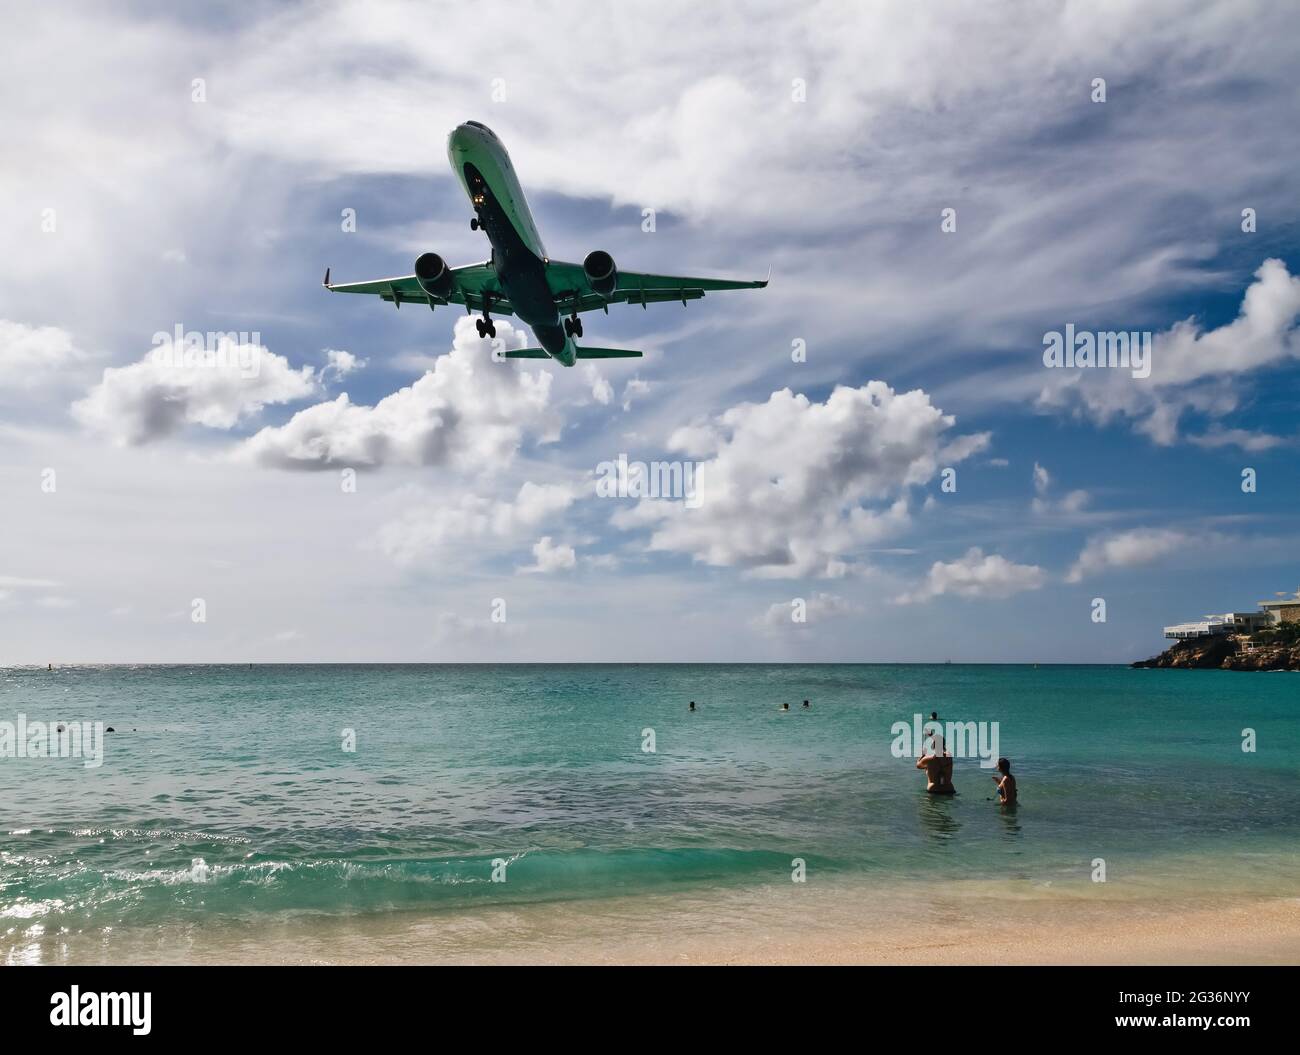 Sint Maarten, Dutch Antilles - December 04, 2015: Tourists watch from the beach as the plane lands at Princess Juliana International Airport in St. Ma Stock Photo